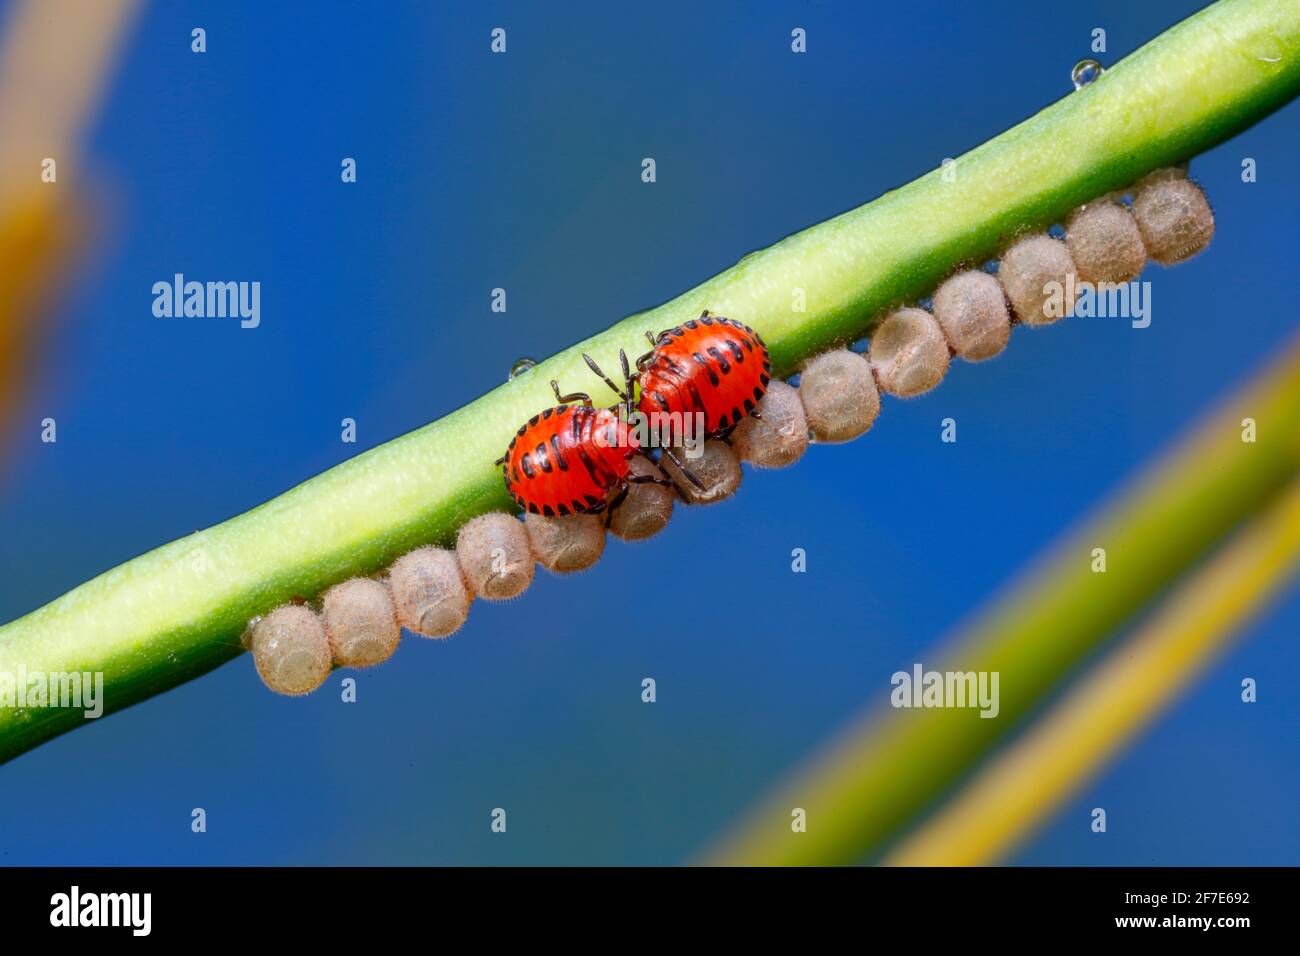 Stinkende Käfer-Nymphen, Hemiptera, eingebettet neben Eiern. Stockfoto